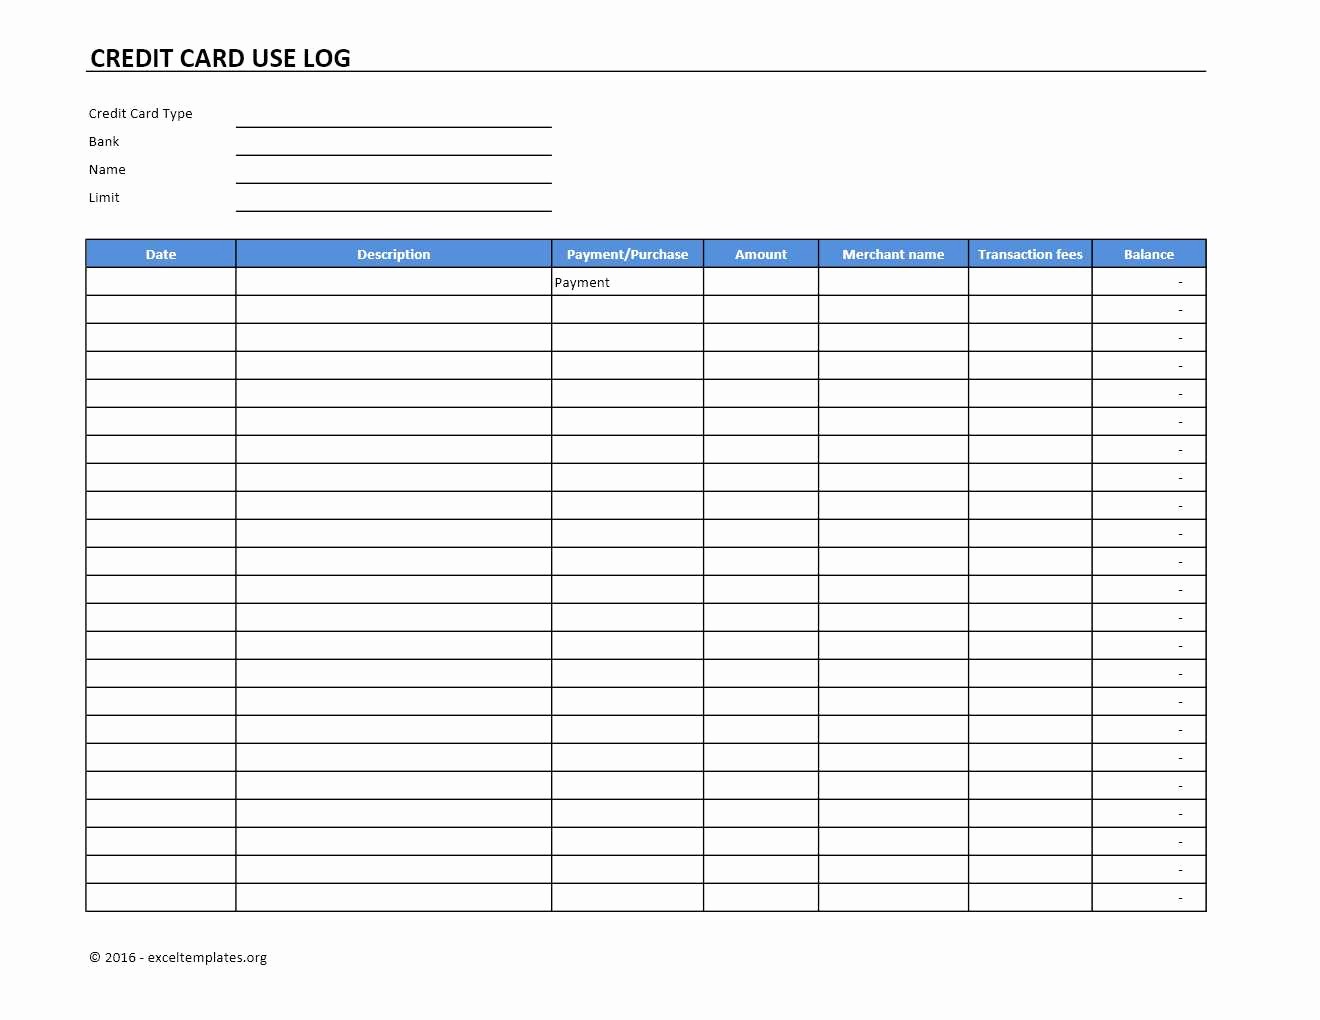 Credit Card Balance Sheet Template New Credit Card Use Log Template Excel Templates